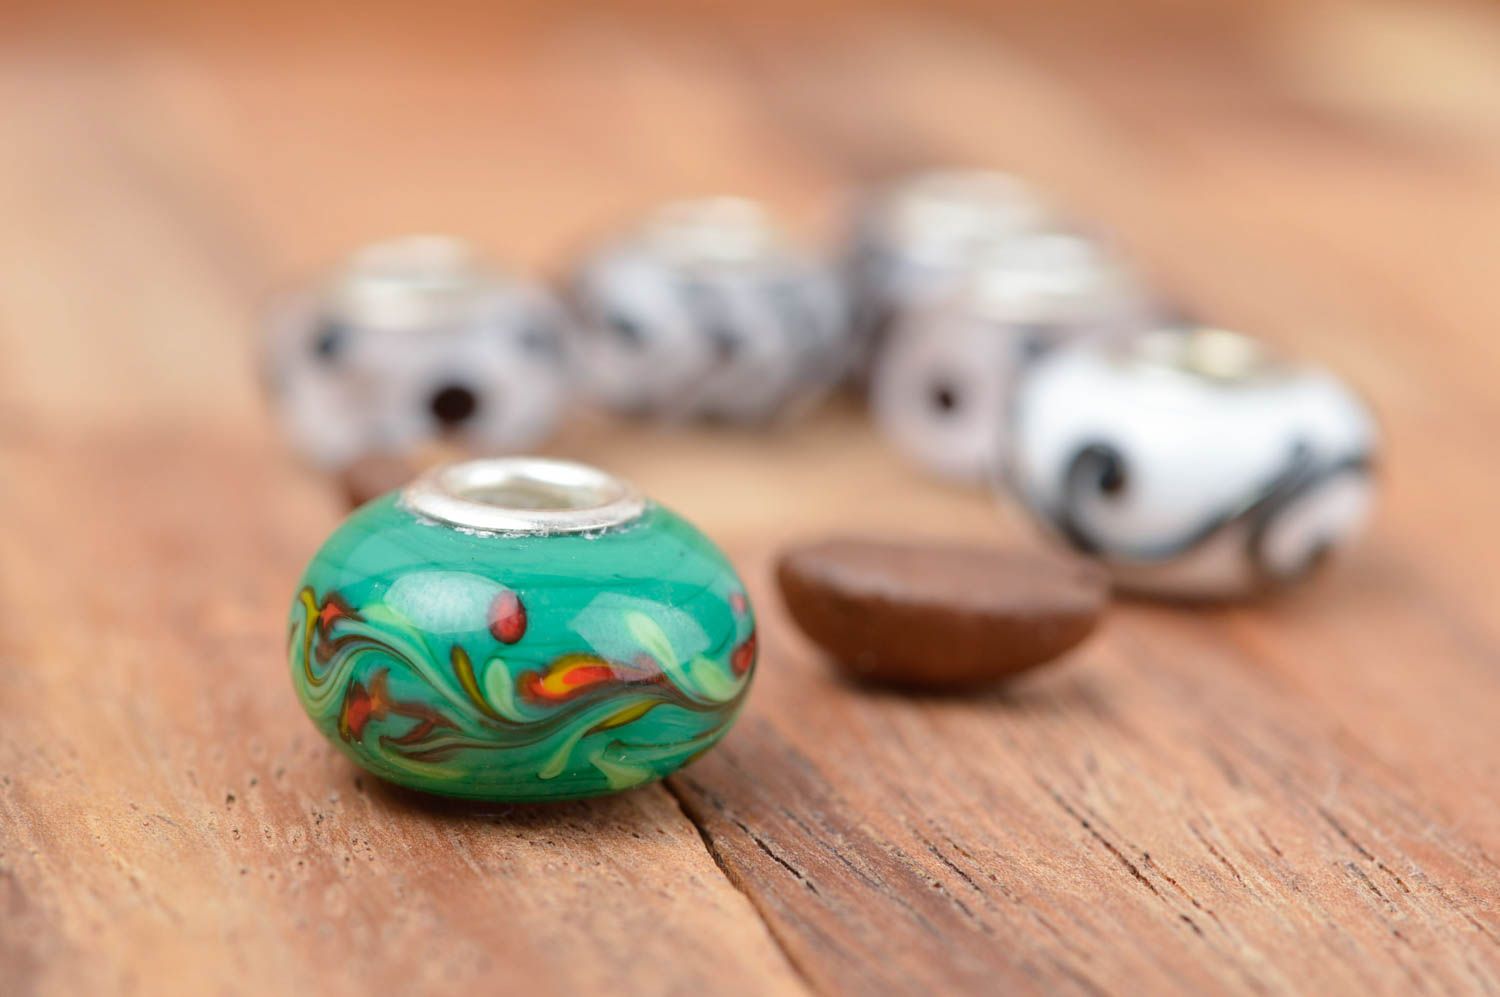 Beautiful handmade glass bead stylish jewelry findings jewelry making supplies photo 1